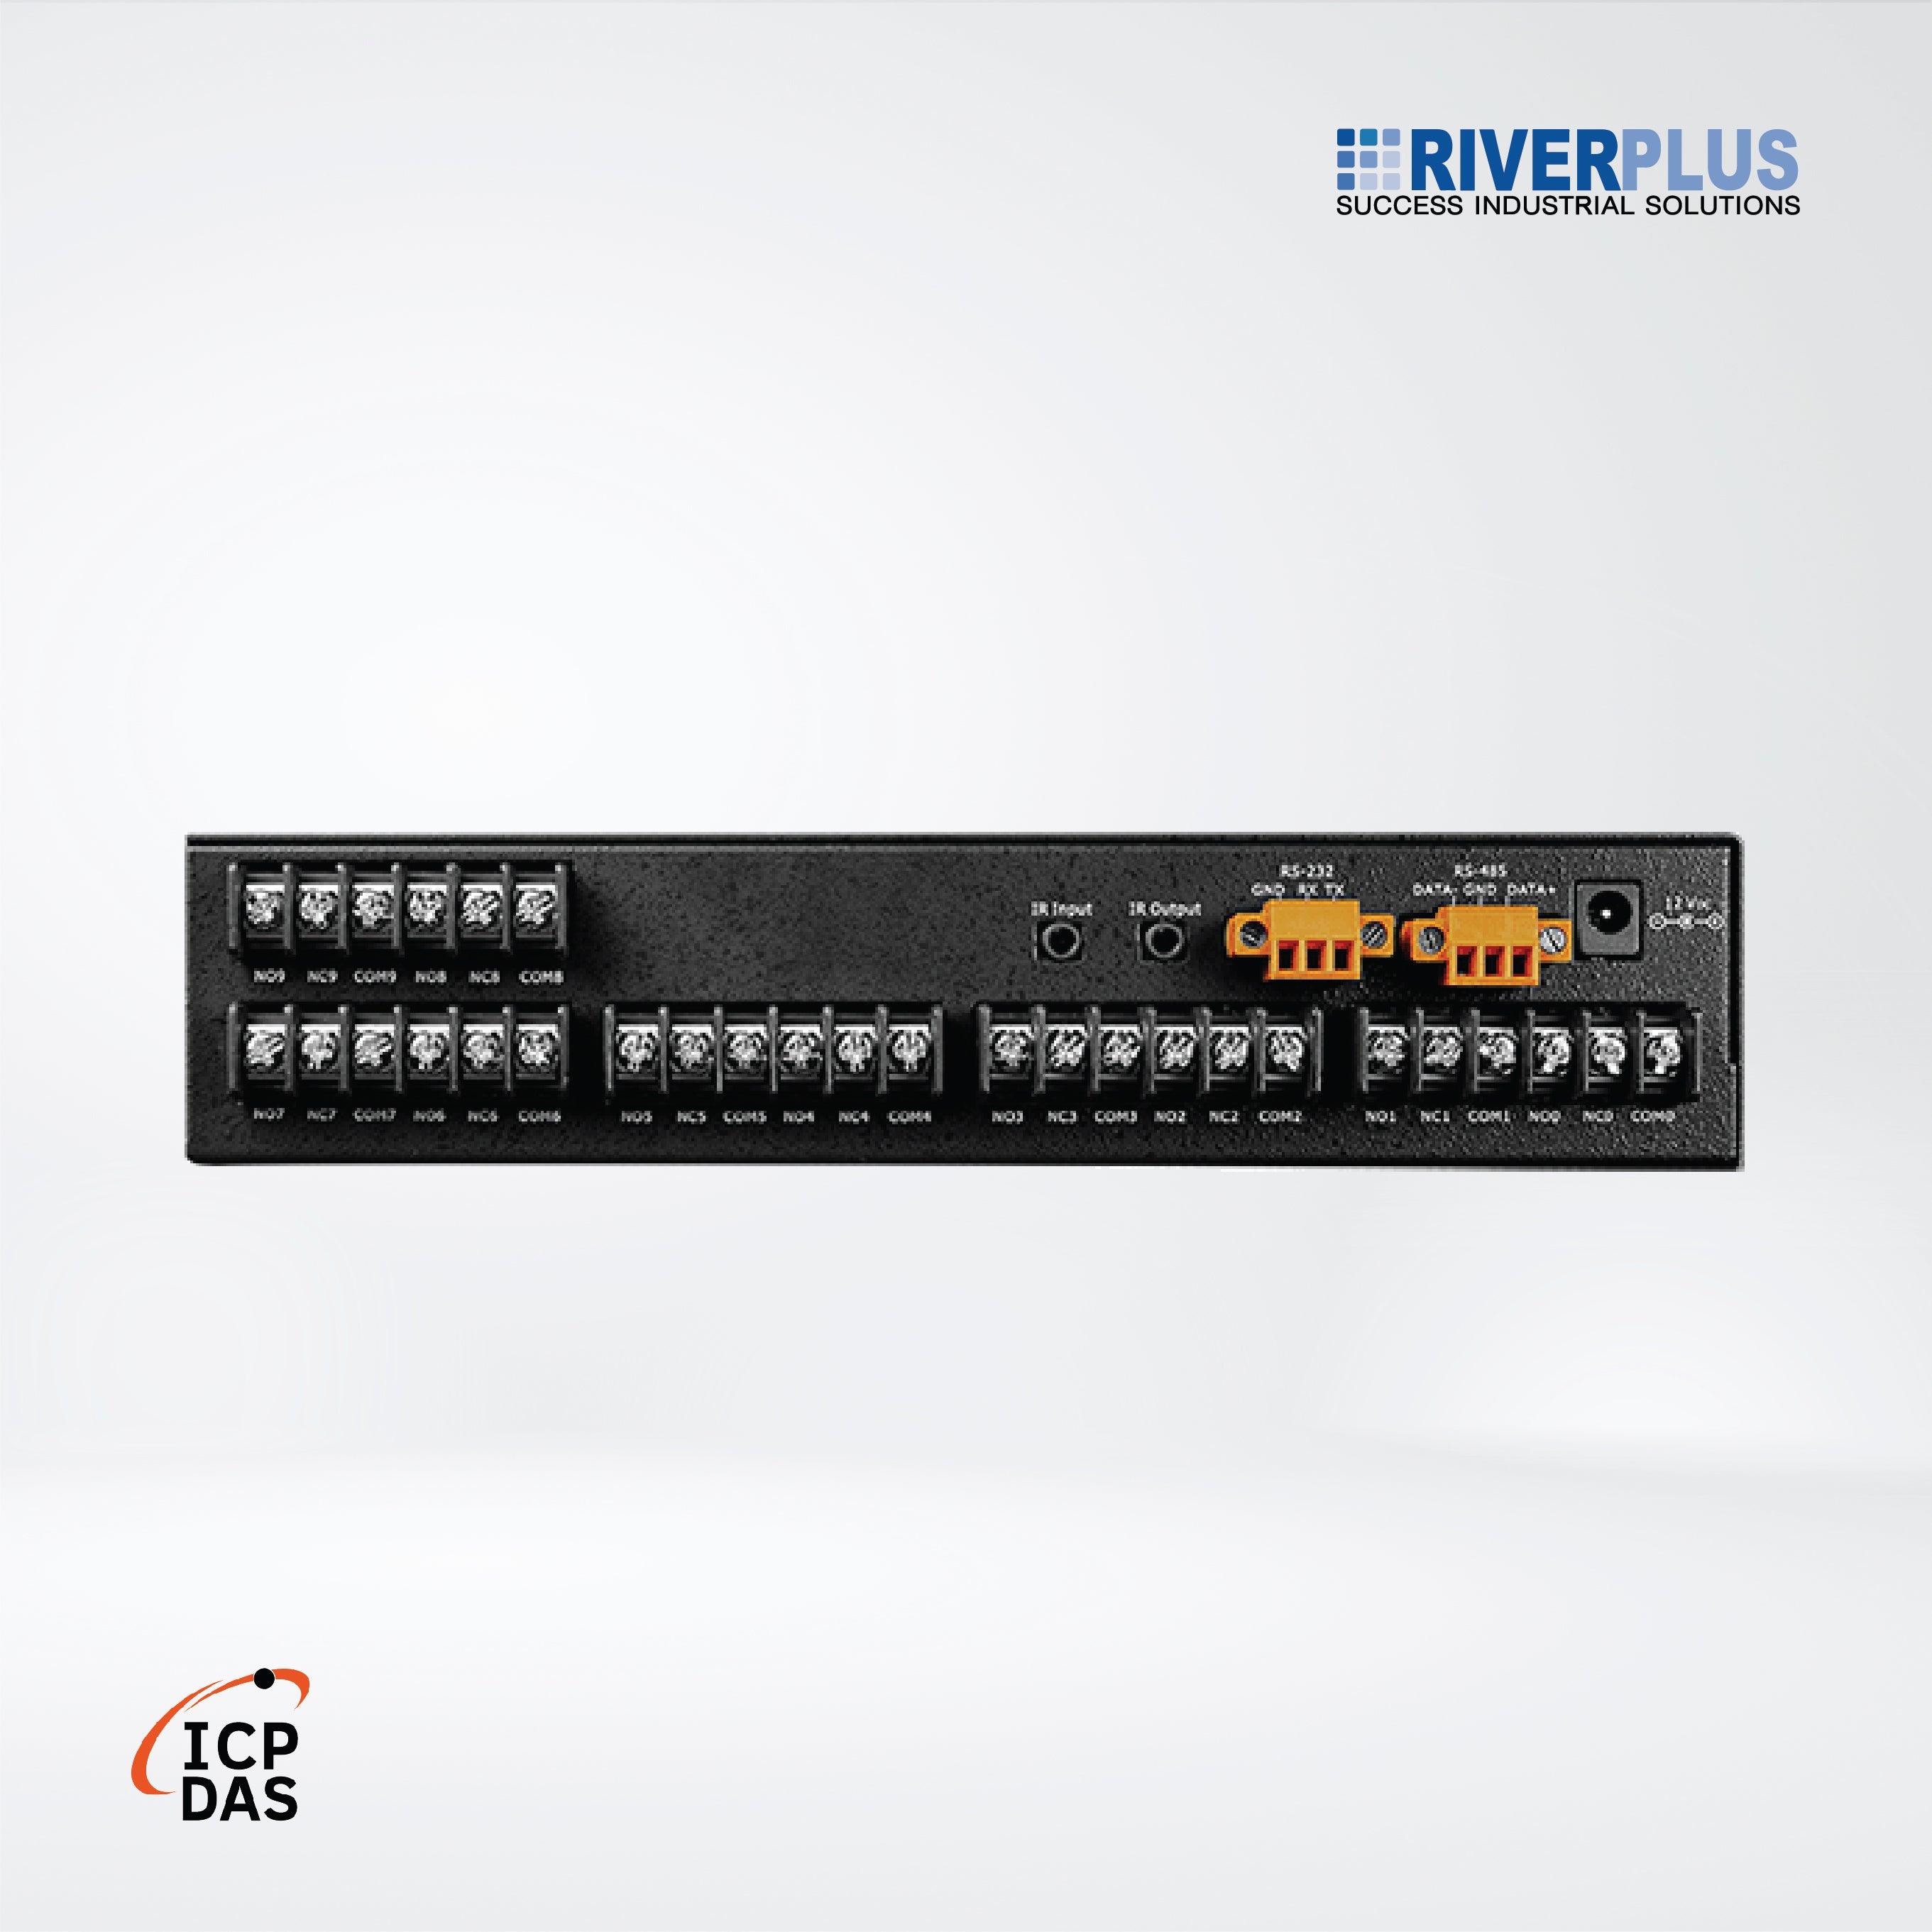 IR-310-RM IR Controlled 10-channel High Power Relay Module - Riverplus